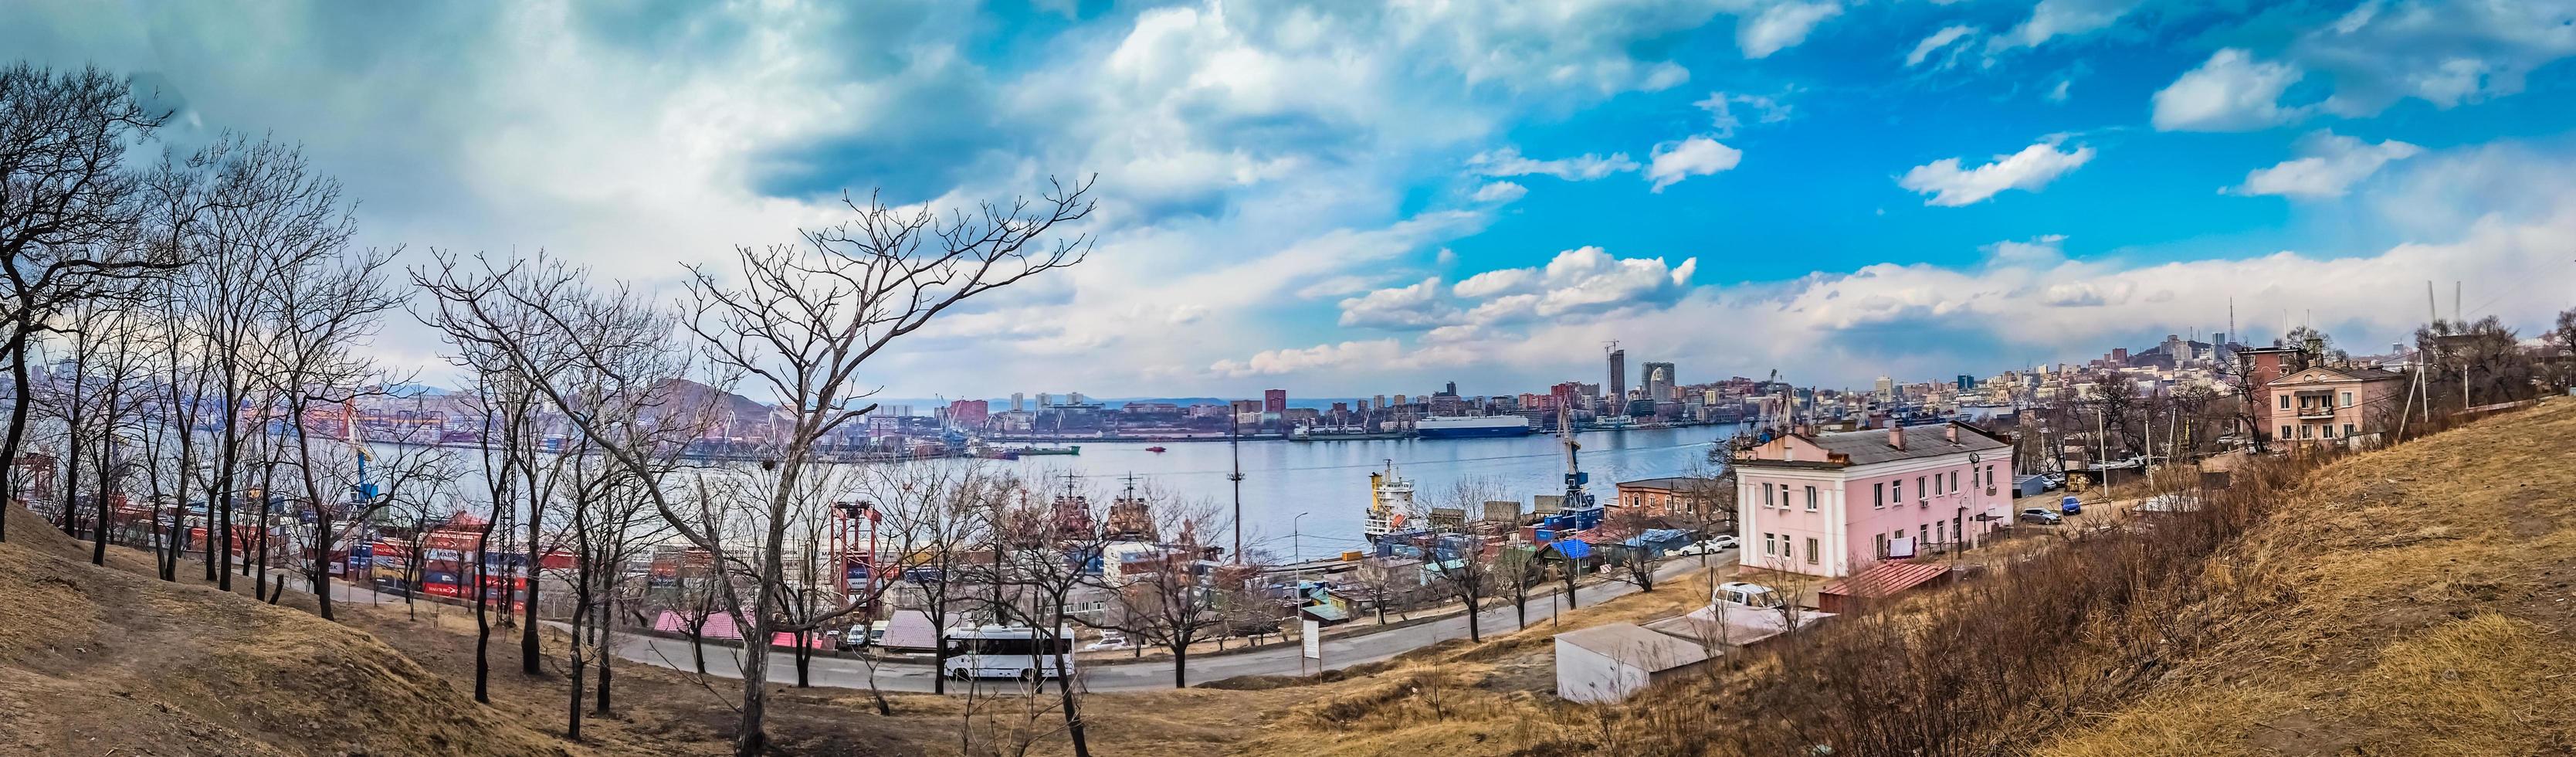 vladivostok, primorsky krai - 6 aprile 2018- panorama del paesaggio urbano con vista sulla baia. foto